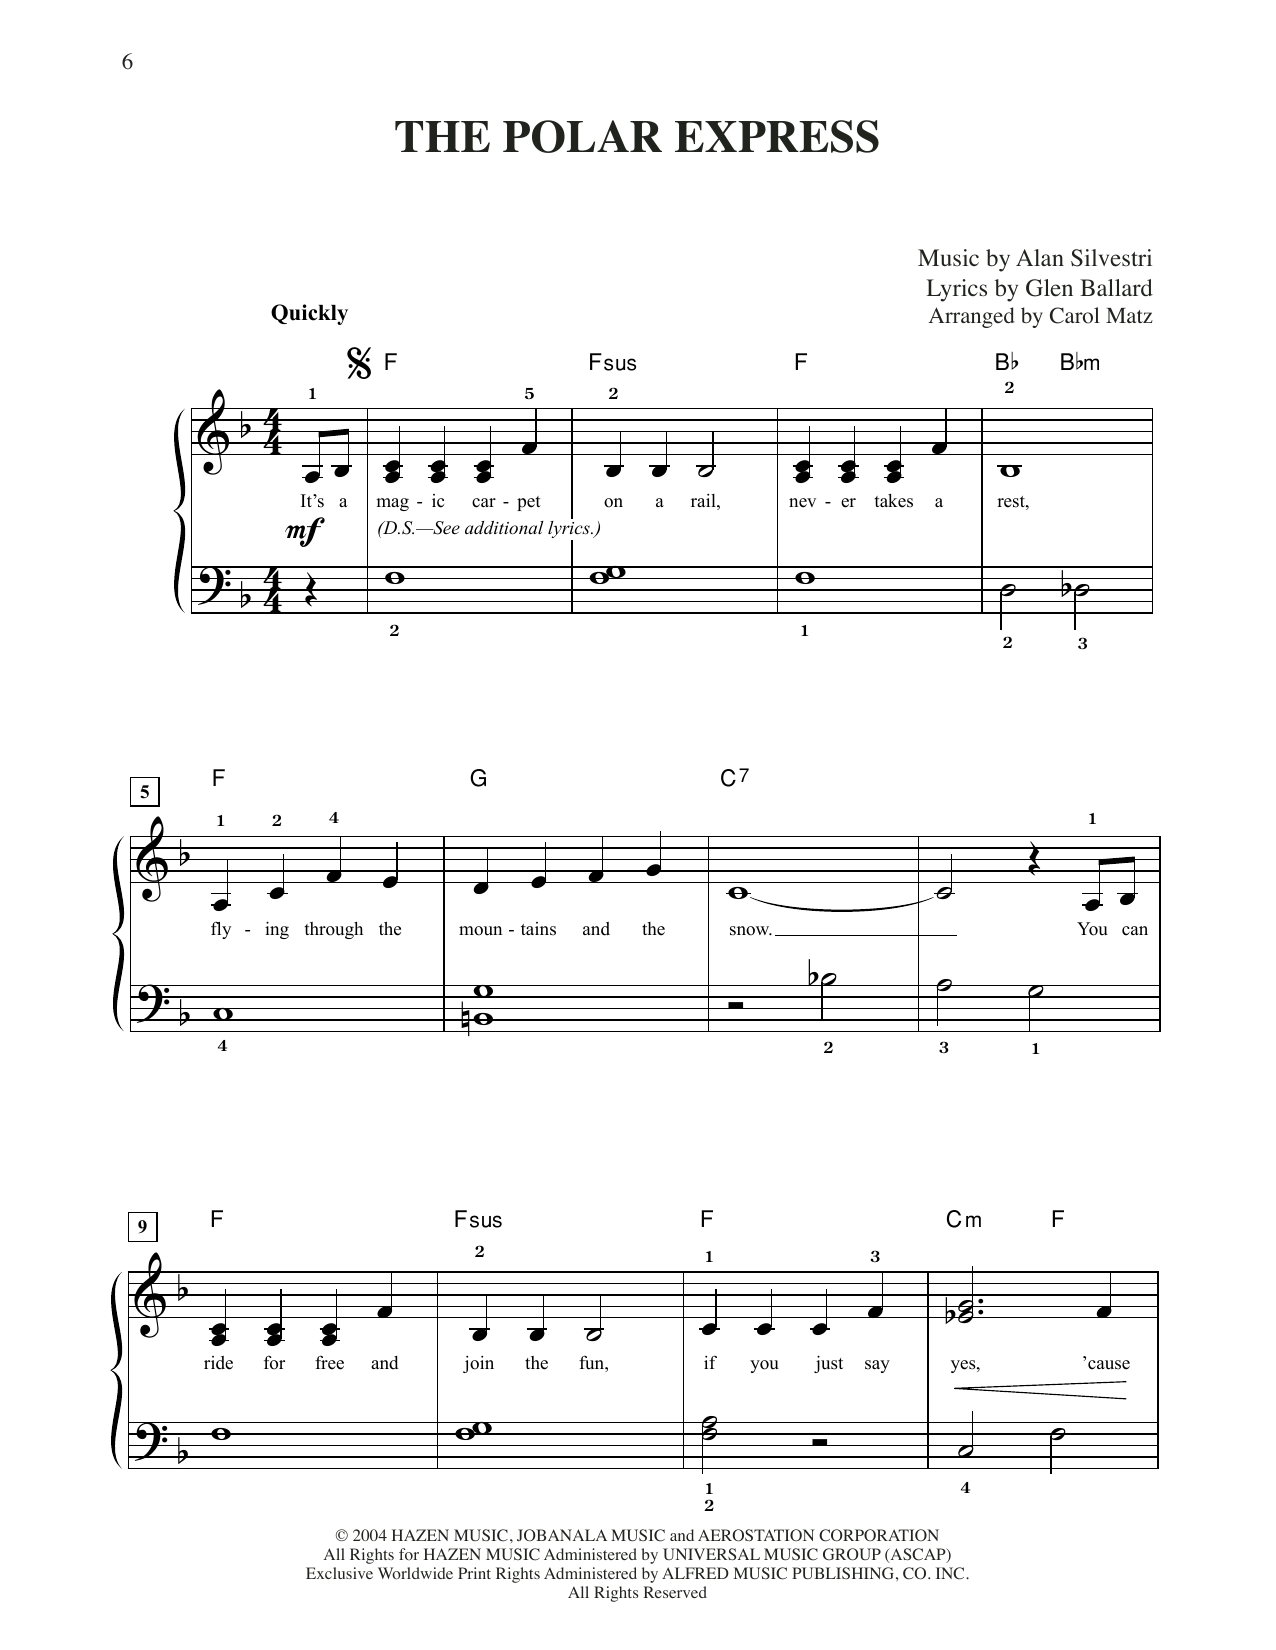 Glen Ballard and Alan Silvestri The Polar Express (arr. Carol Matz) Sheet Music Notes & Chords for Big Note Piano - Download or Print PDF